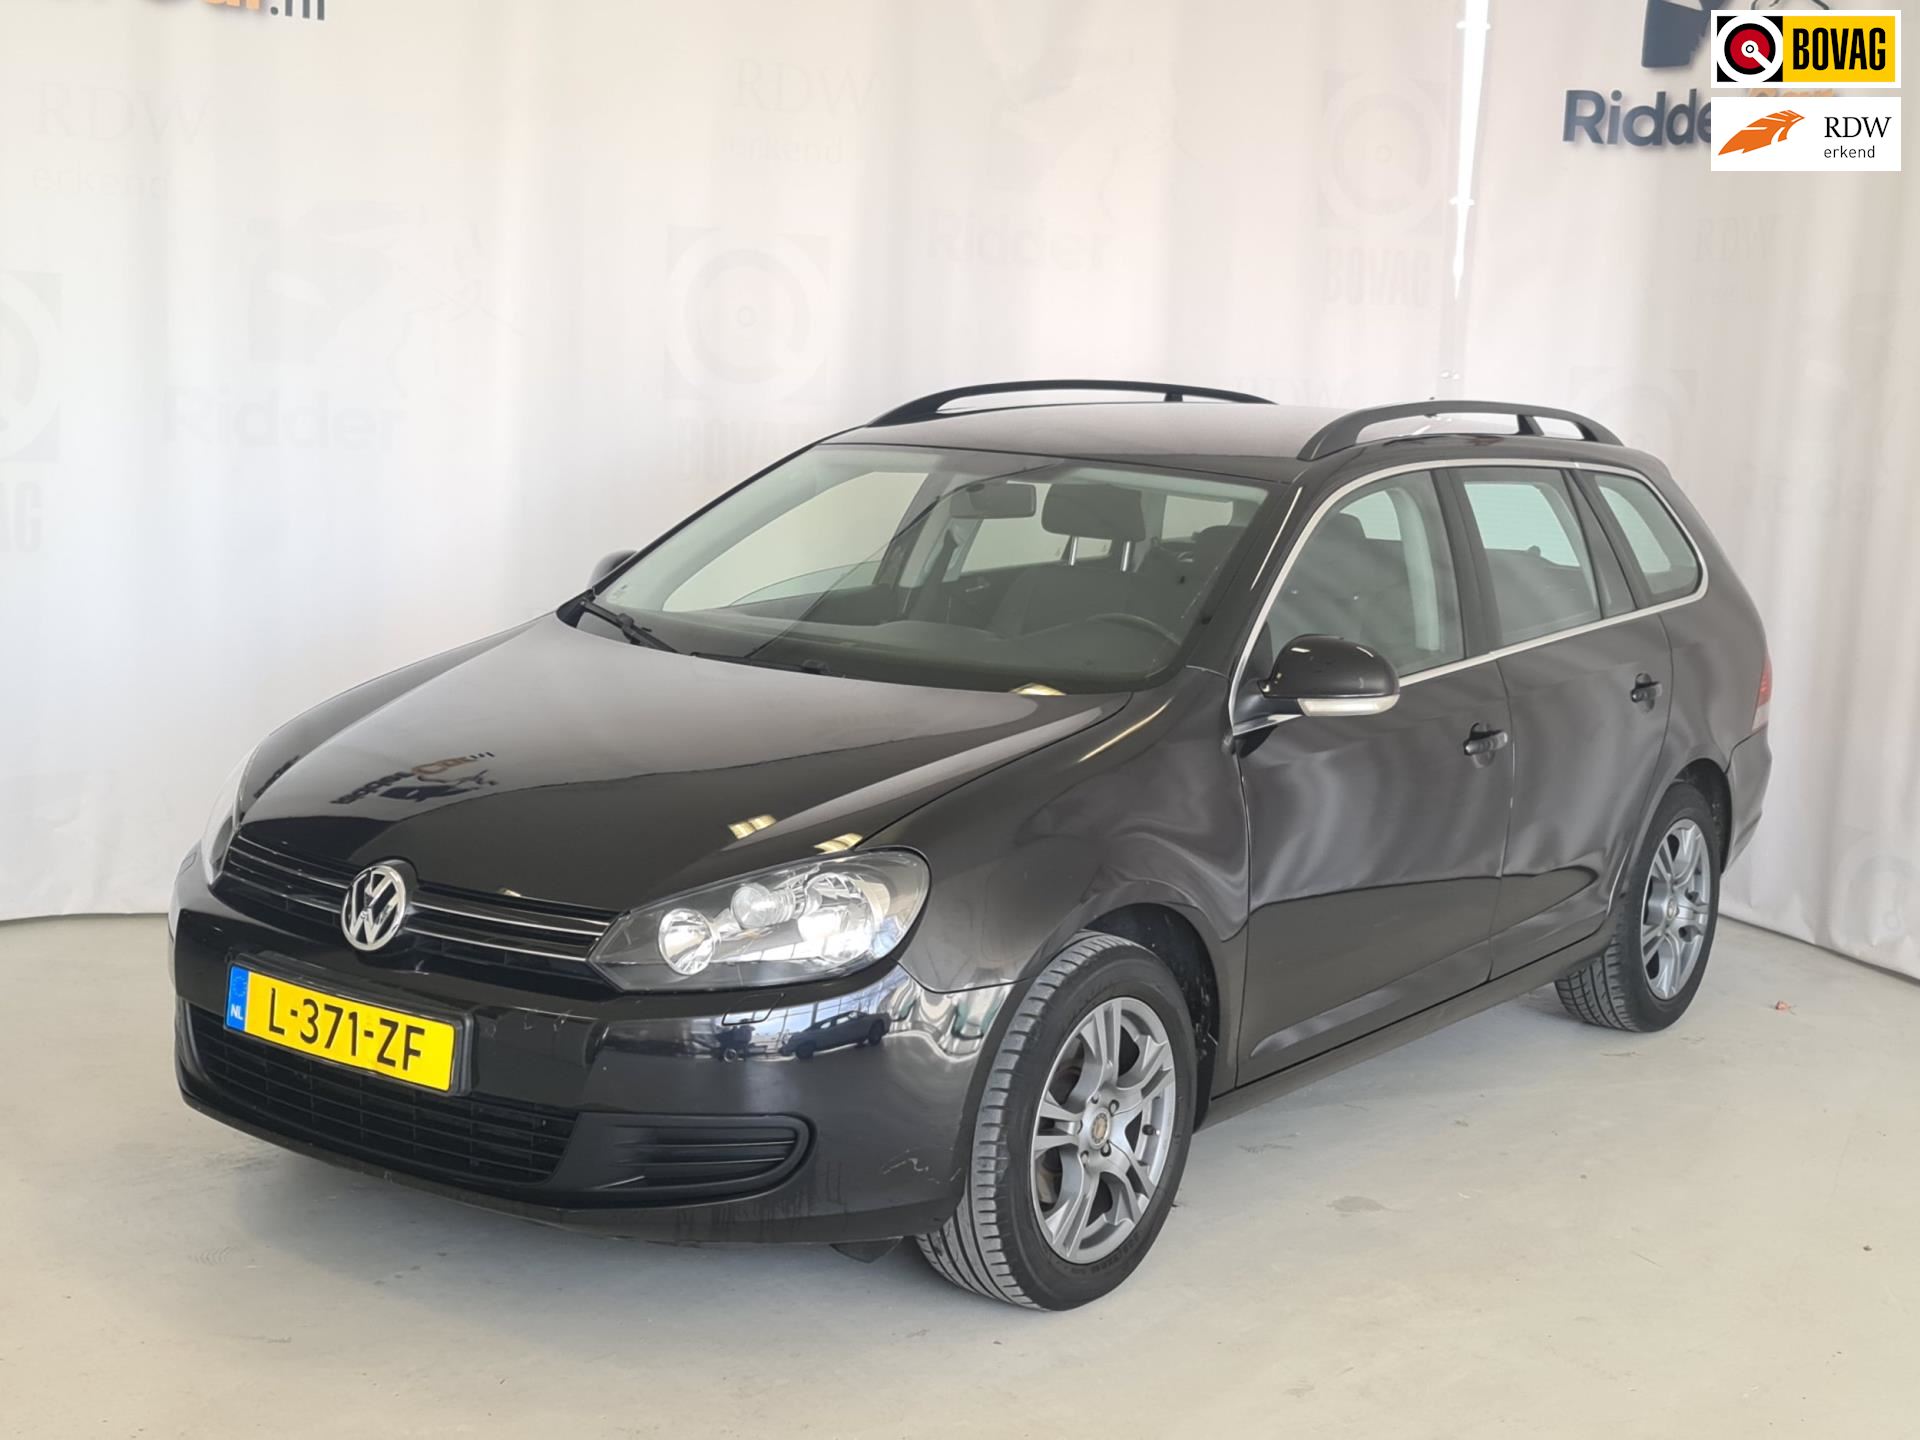 Volkswagen Golf Plus occasion - Riddercar Ridderkerk